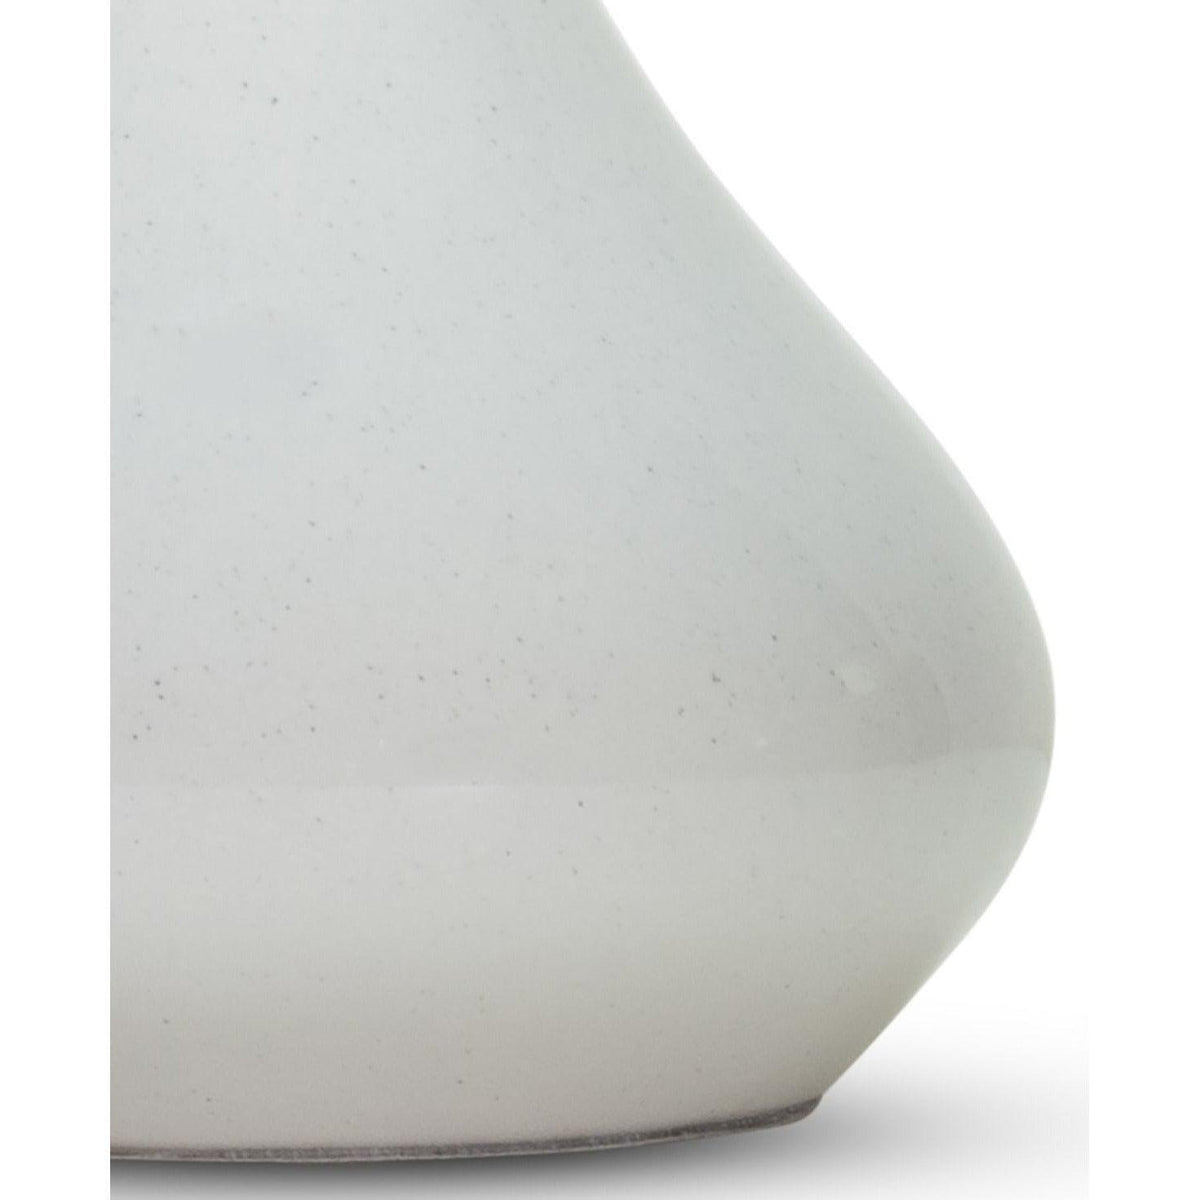 Flow Decor - Dinah Table Lamp - 4083 | Montreal Lighting & Hardware